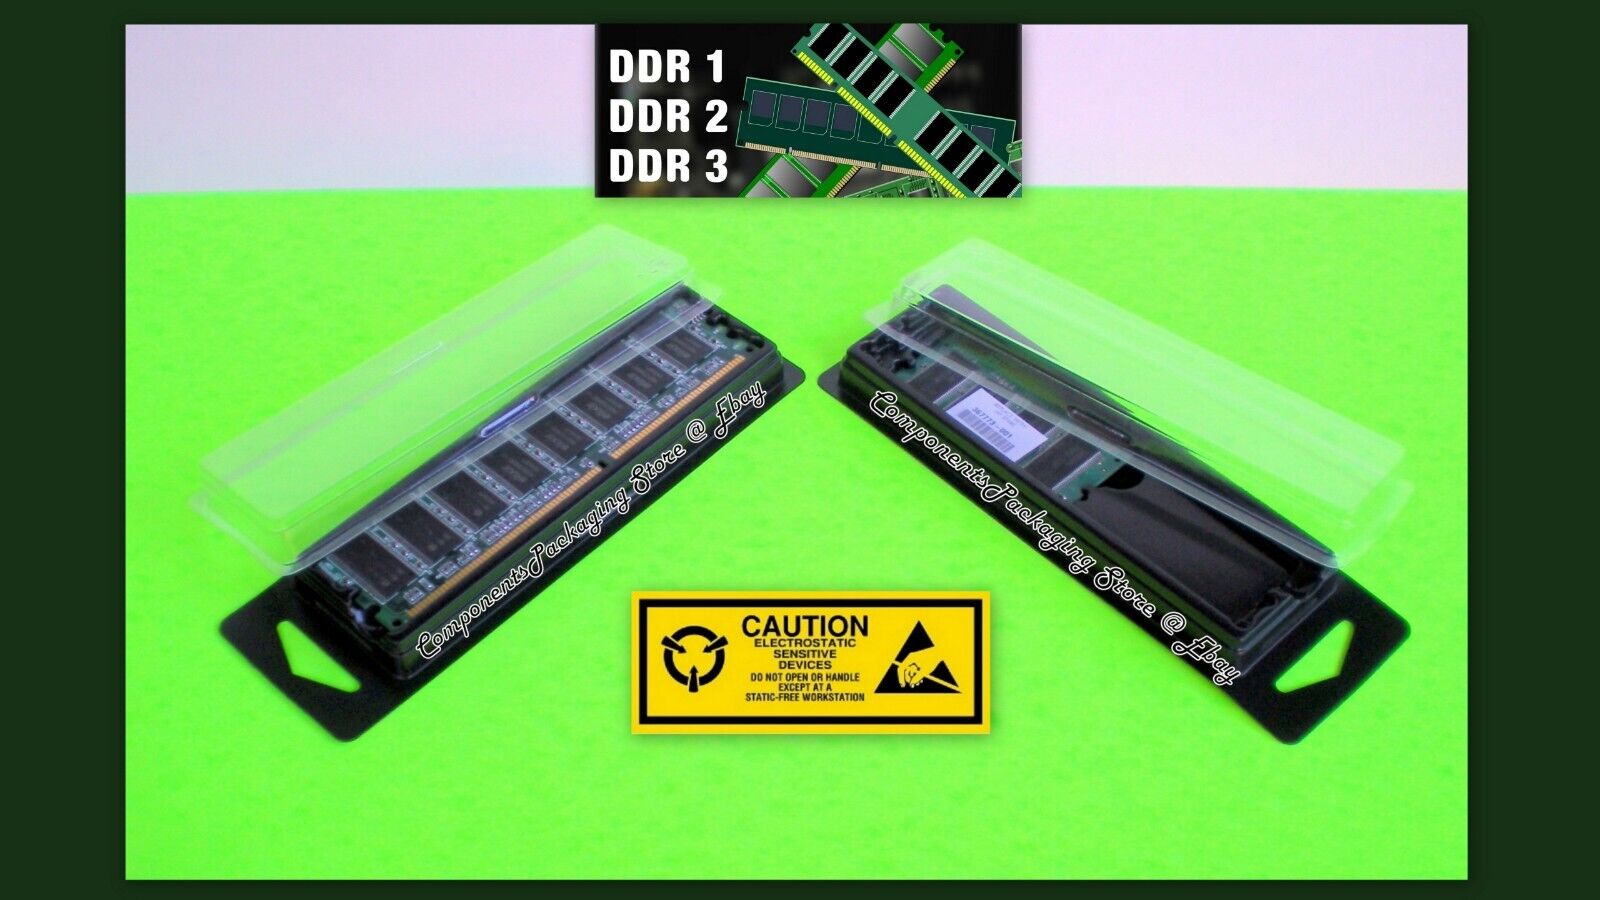  PC RAM Memory Blister Pack Plastic Case for DDR DIMM  Lot of 5 15 25 40 80 150